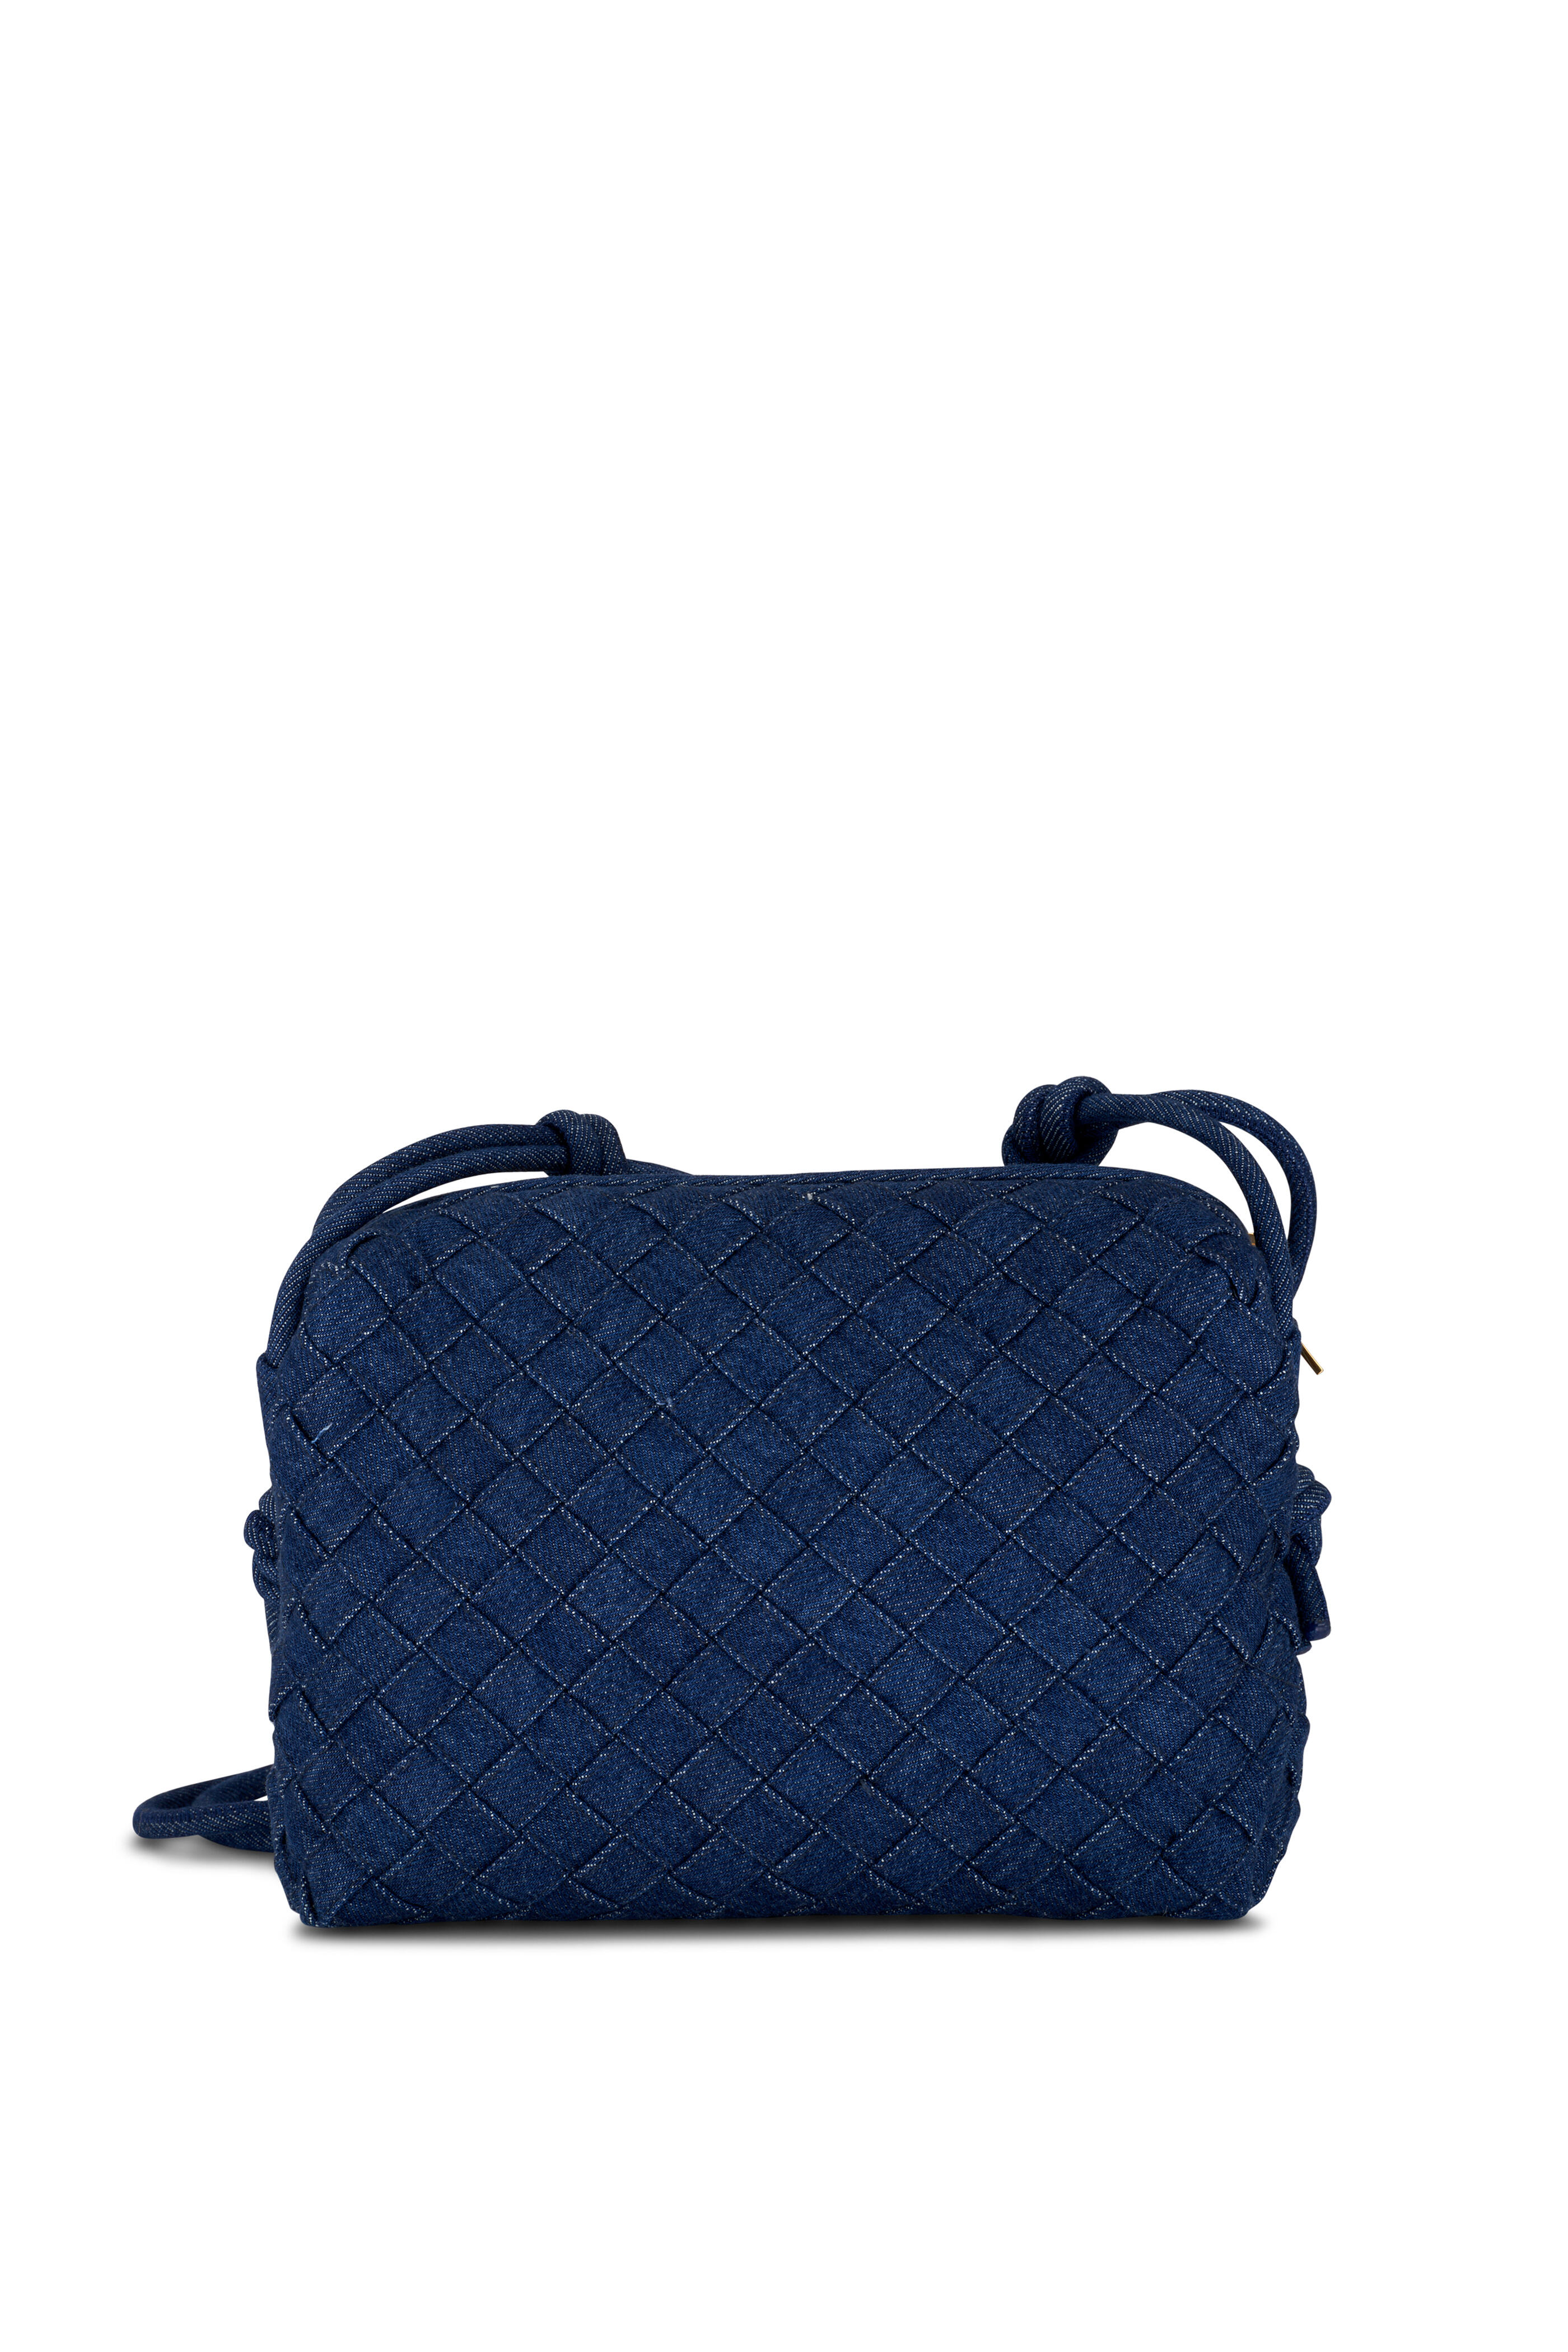 Bottega Veneta Mini Leather Intrecciato Loop Cross-body Bag - Blue - One Size